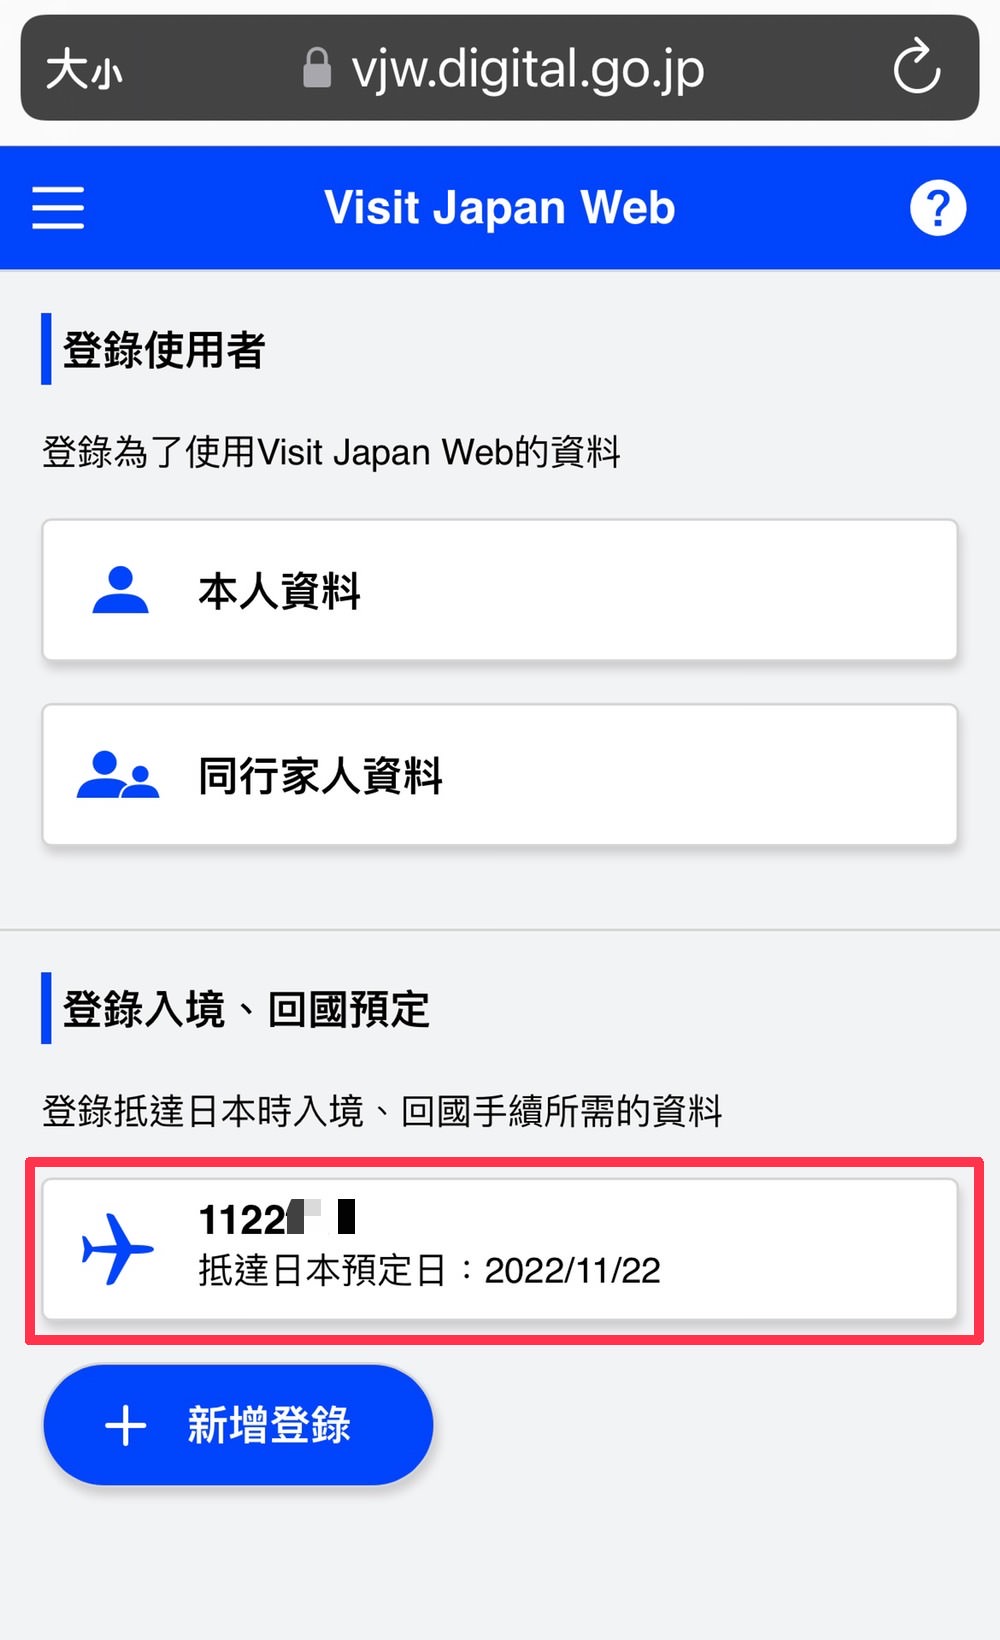 visit japan web cannot upload passport